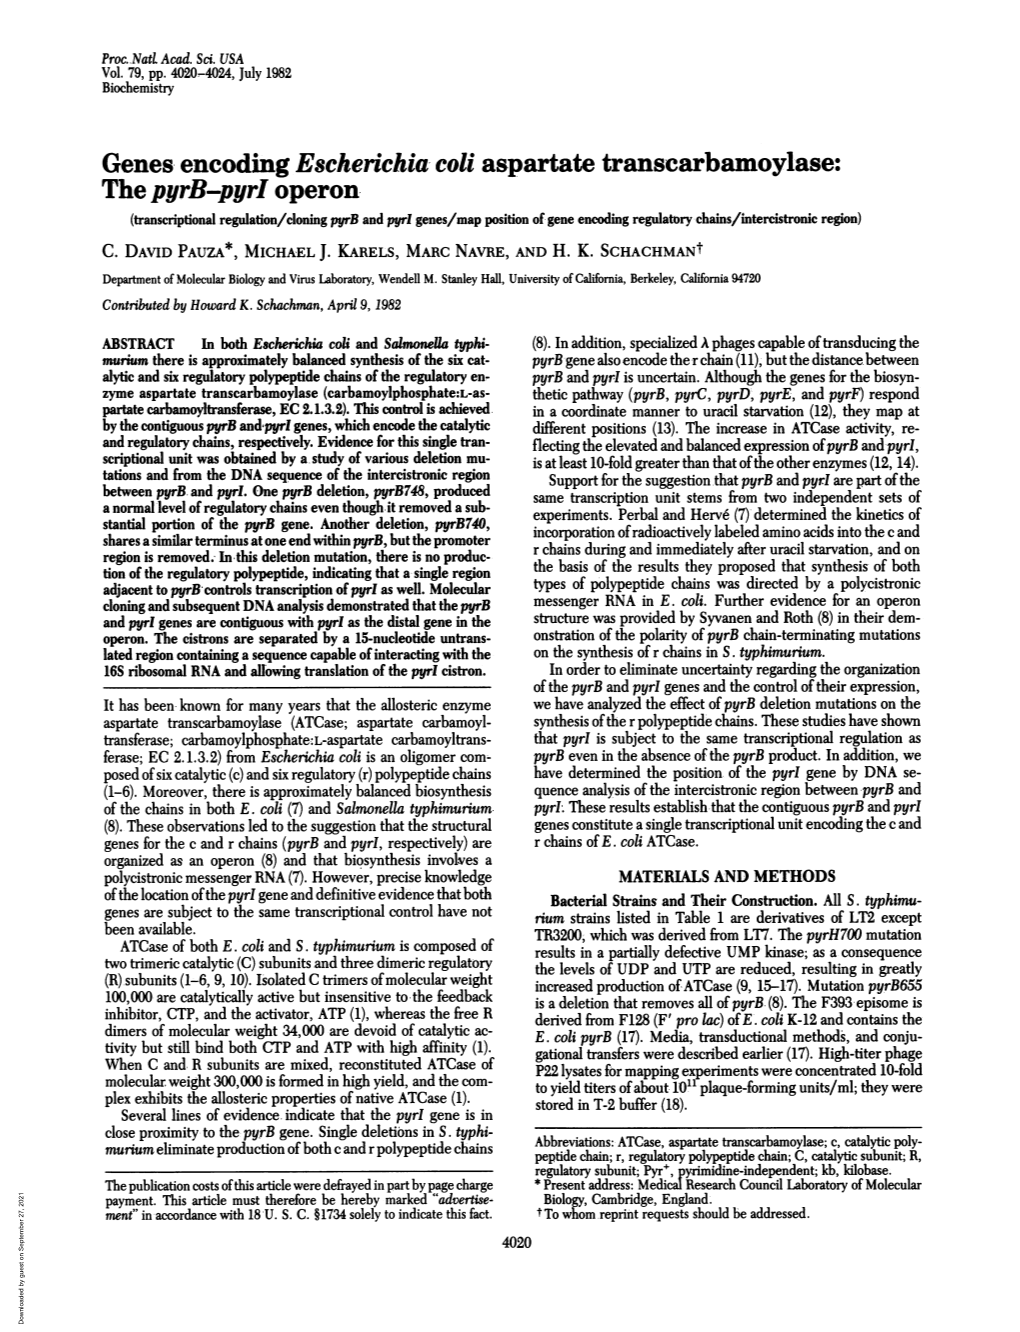 Genes Encoding Escherichia Coli Aspartate Transcarbamoylase